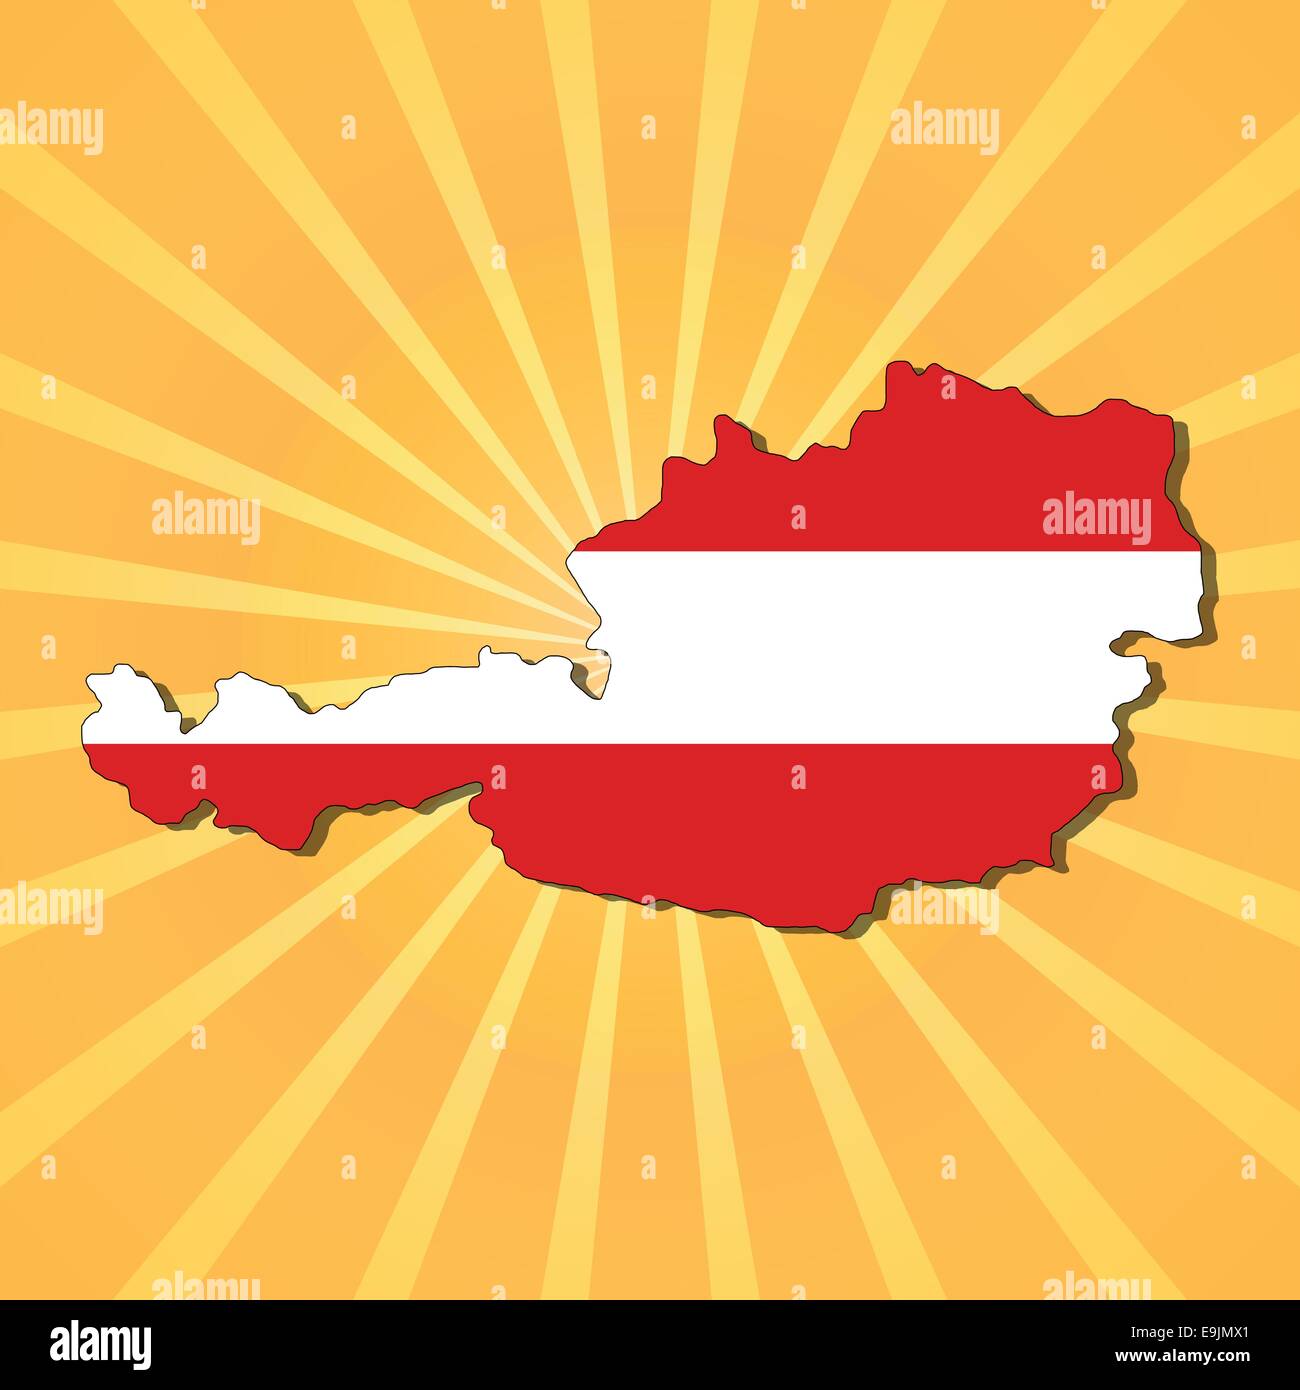 Austria map flag on sunburst illustration Stock Vector